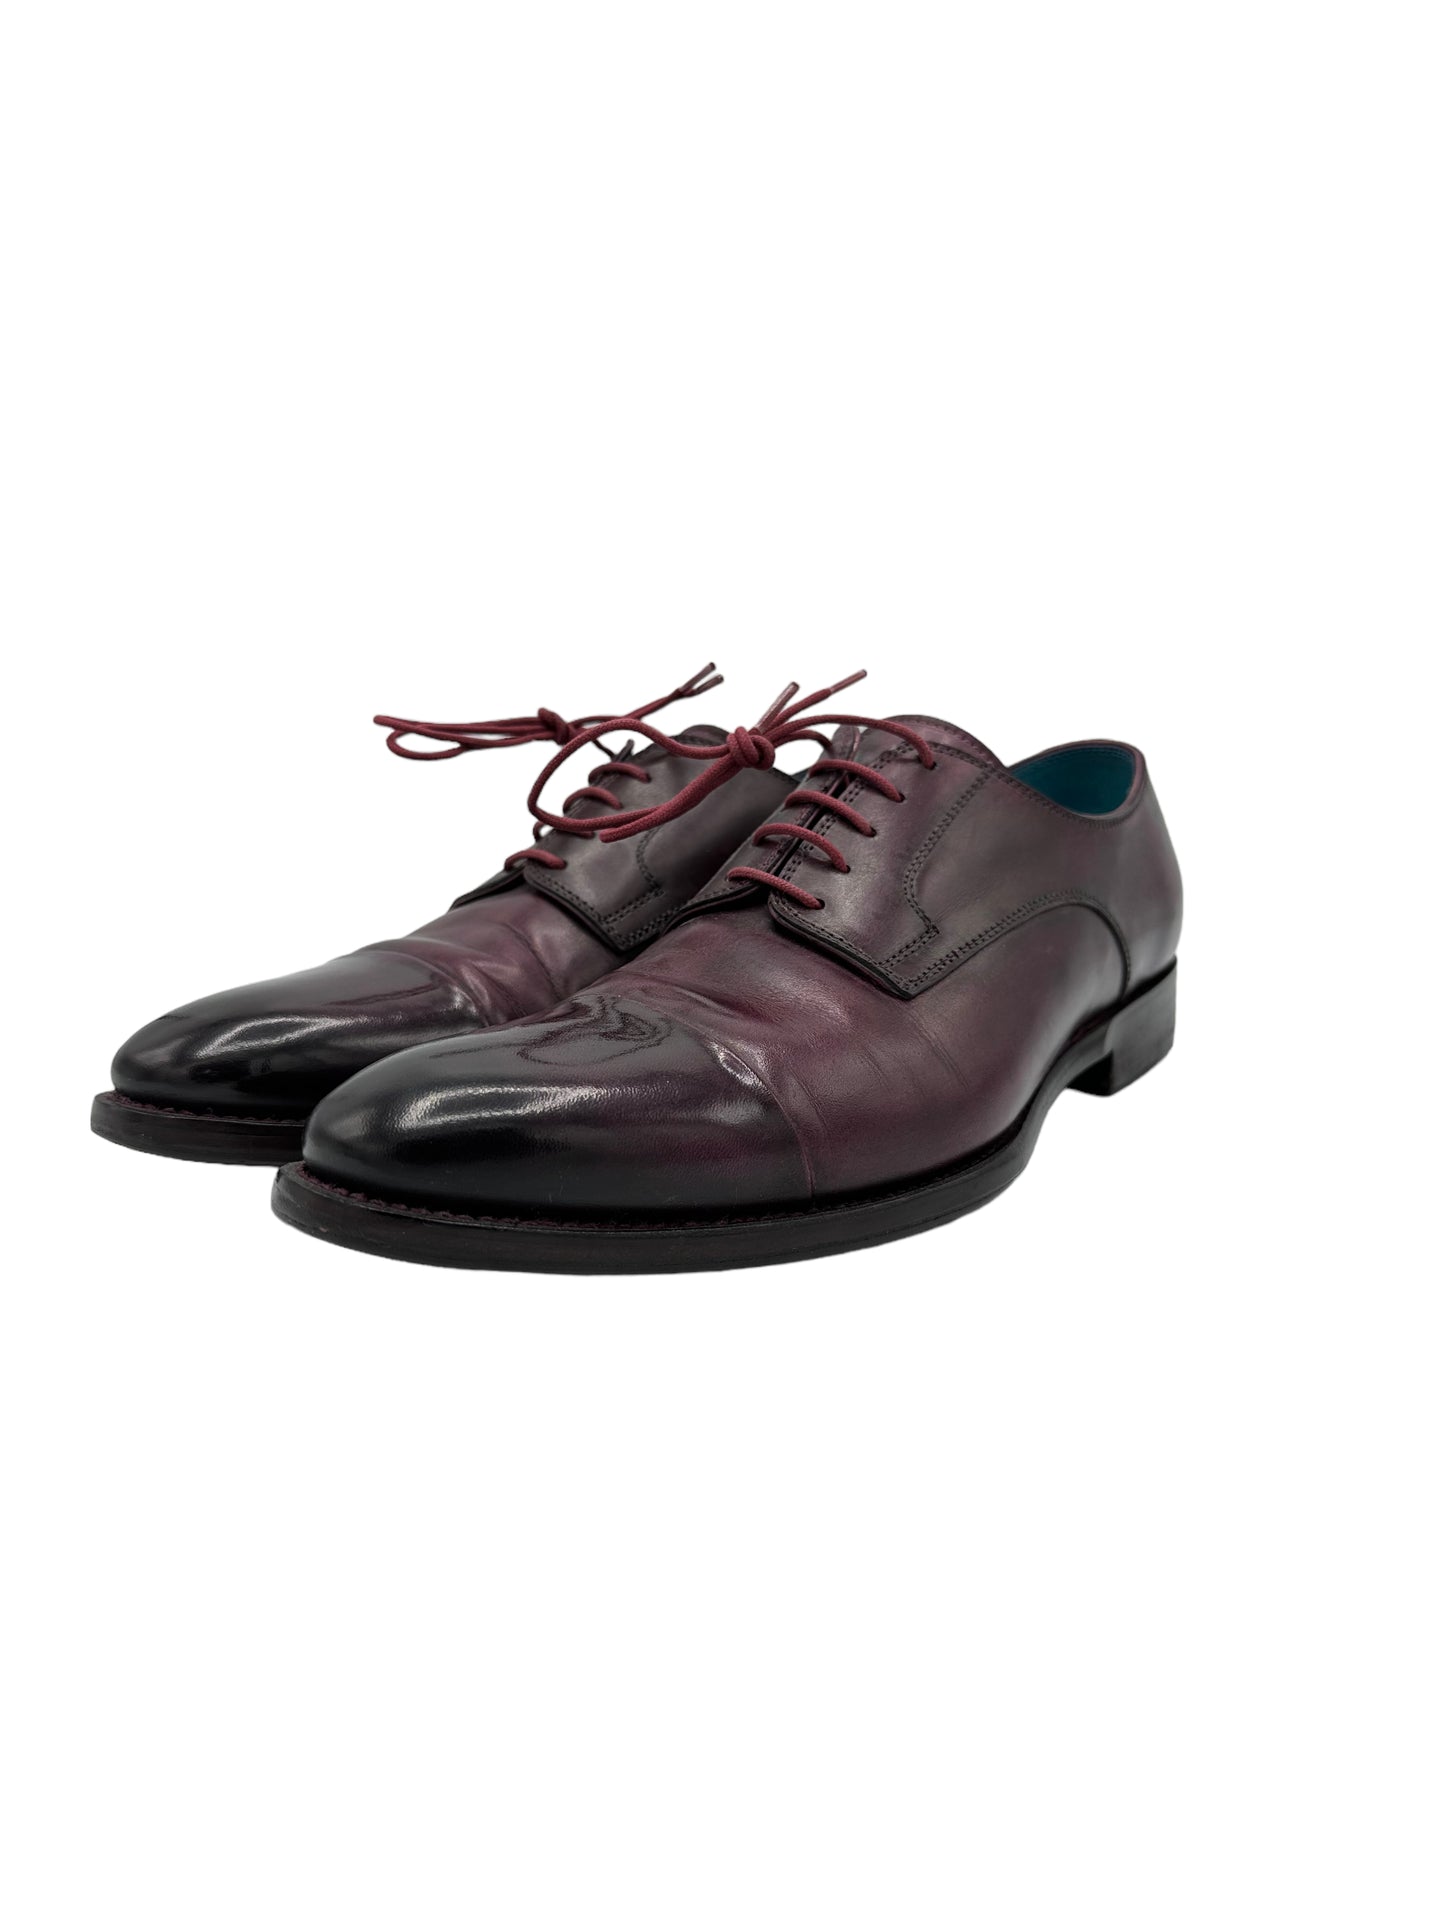 Custom Unbranded Purple Burgundy Oxford Dress Shoe